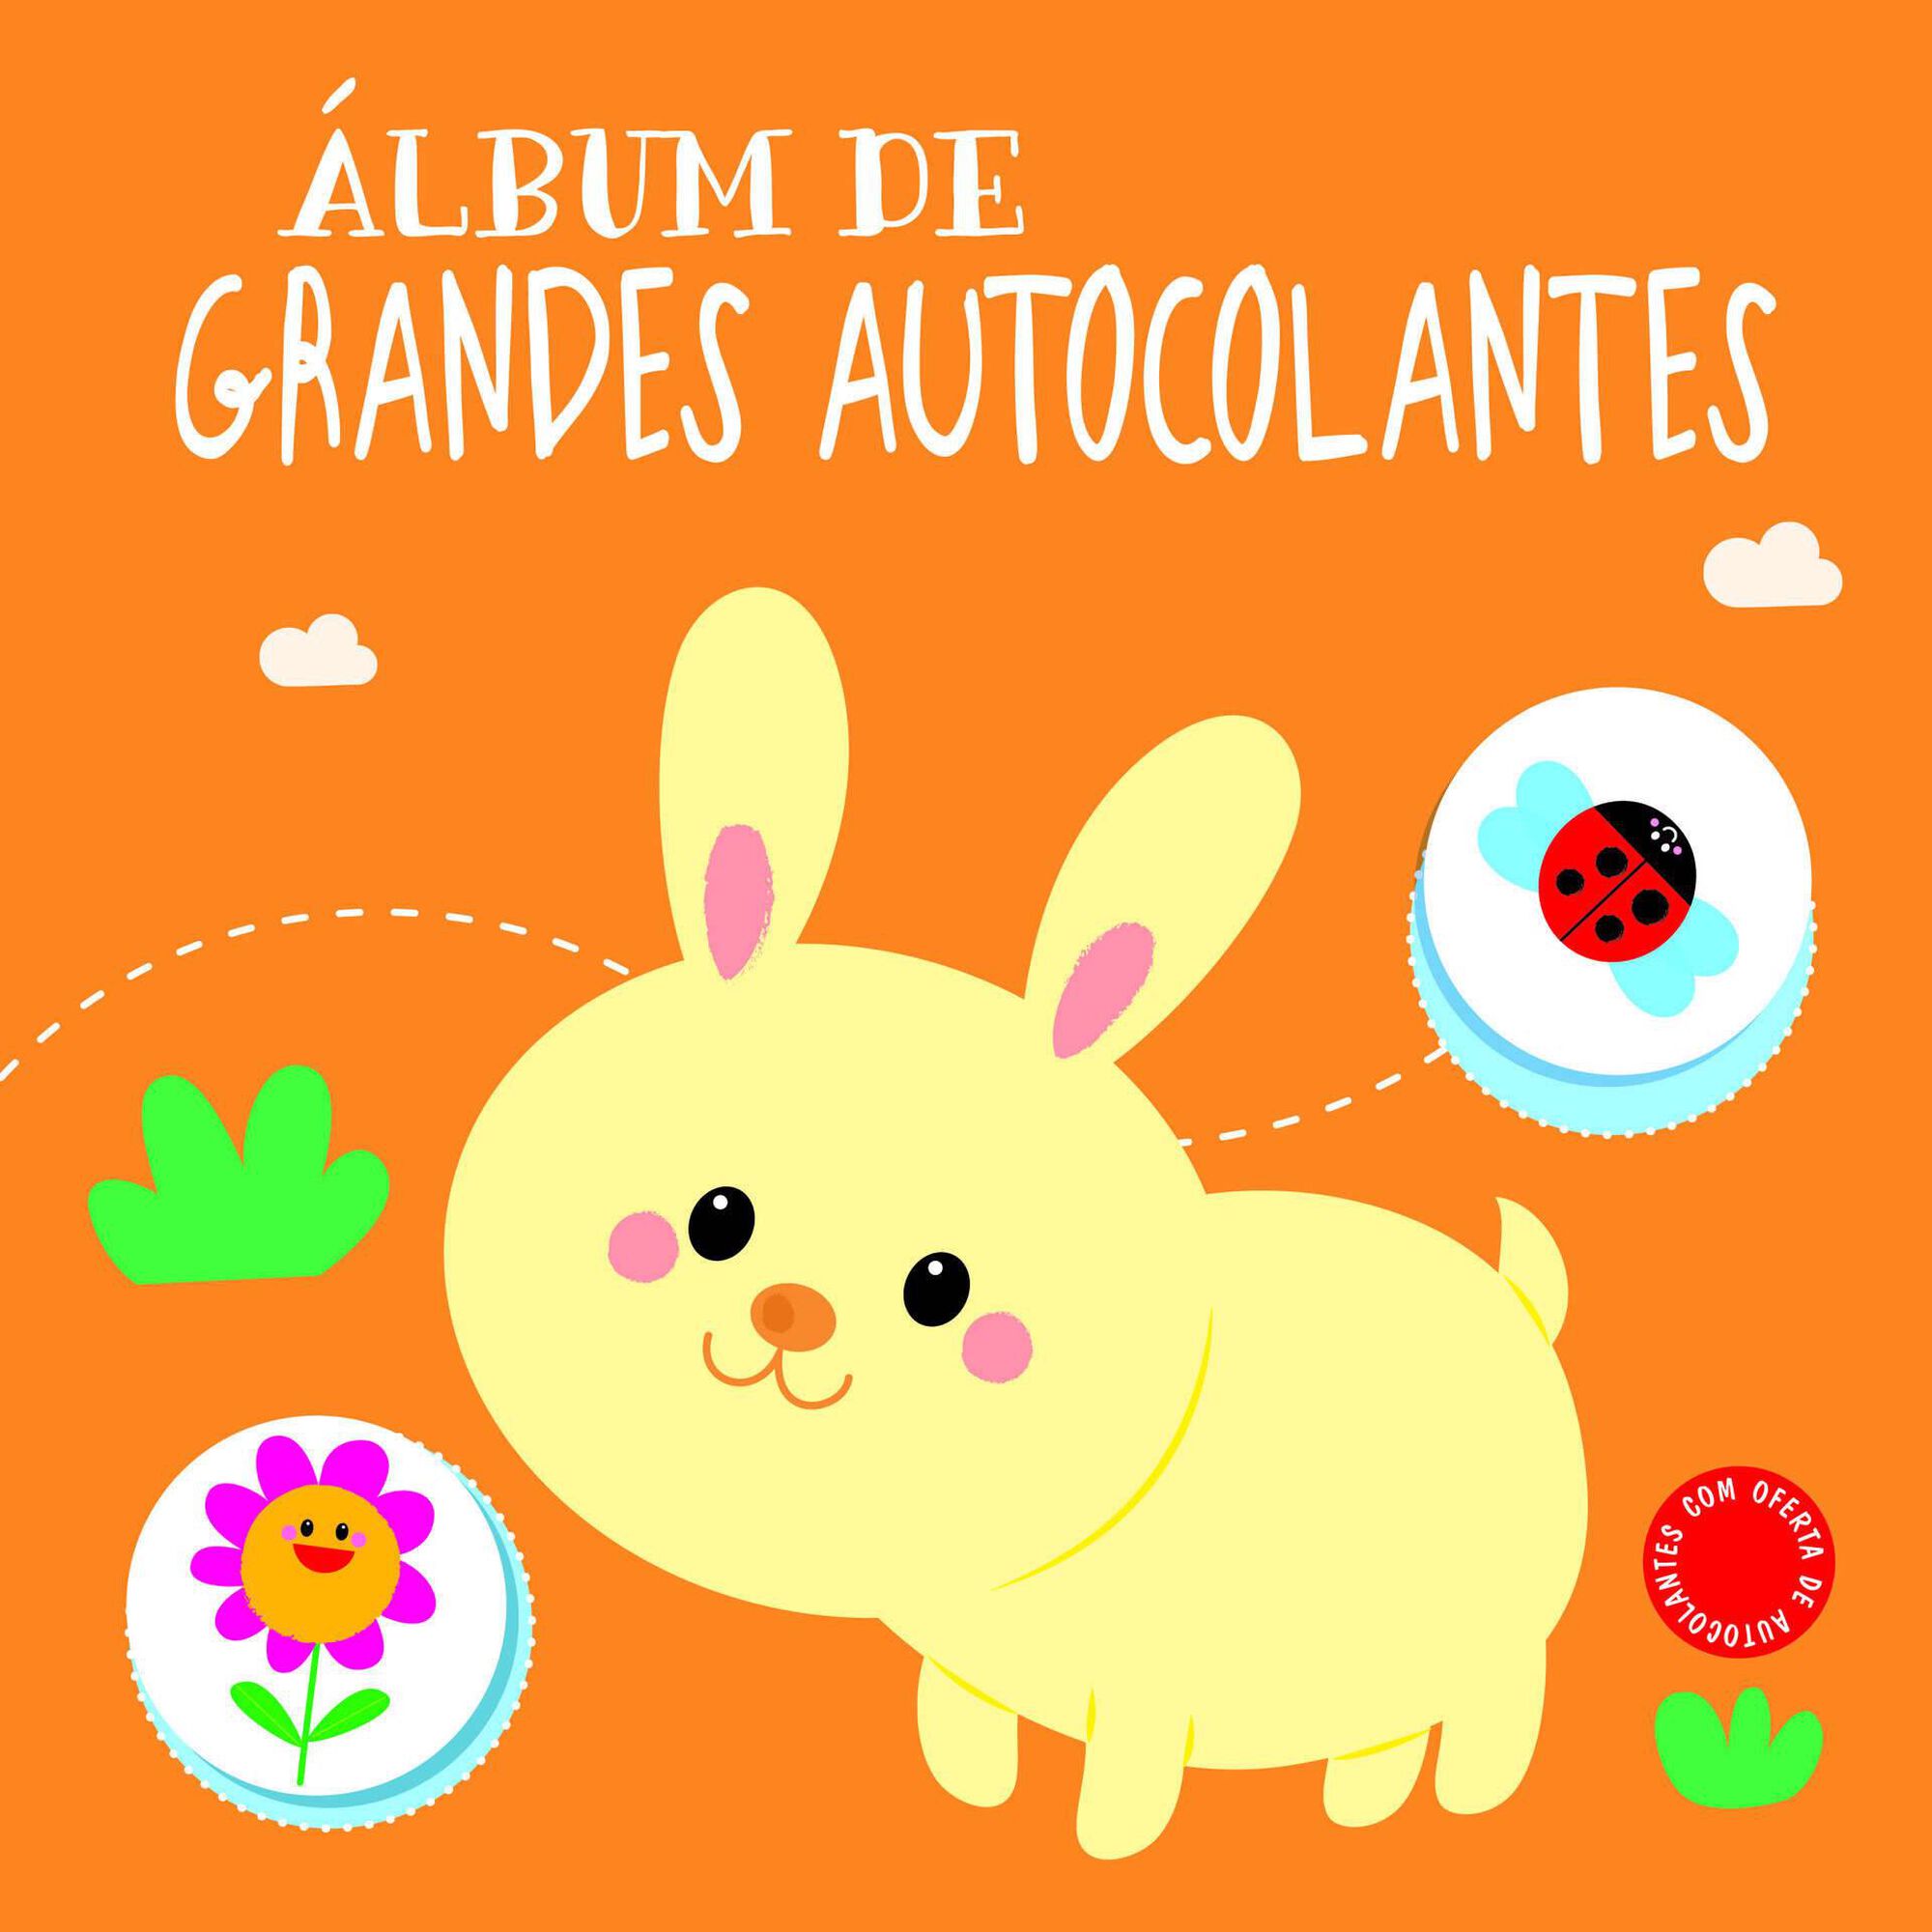 Álbum de Grandes Autocolantes - Coelho